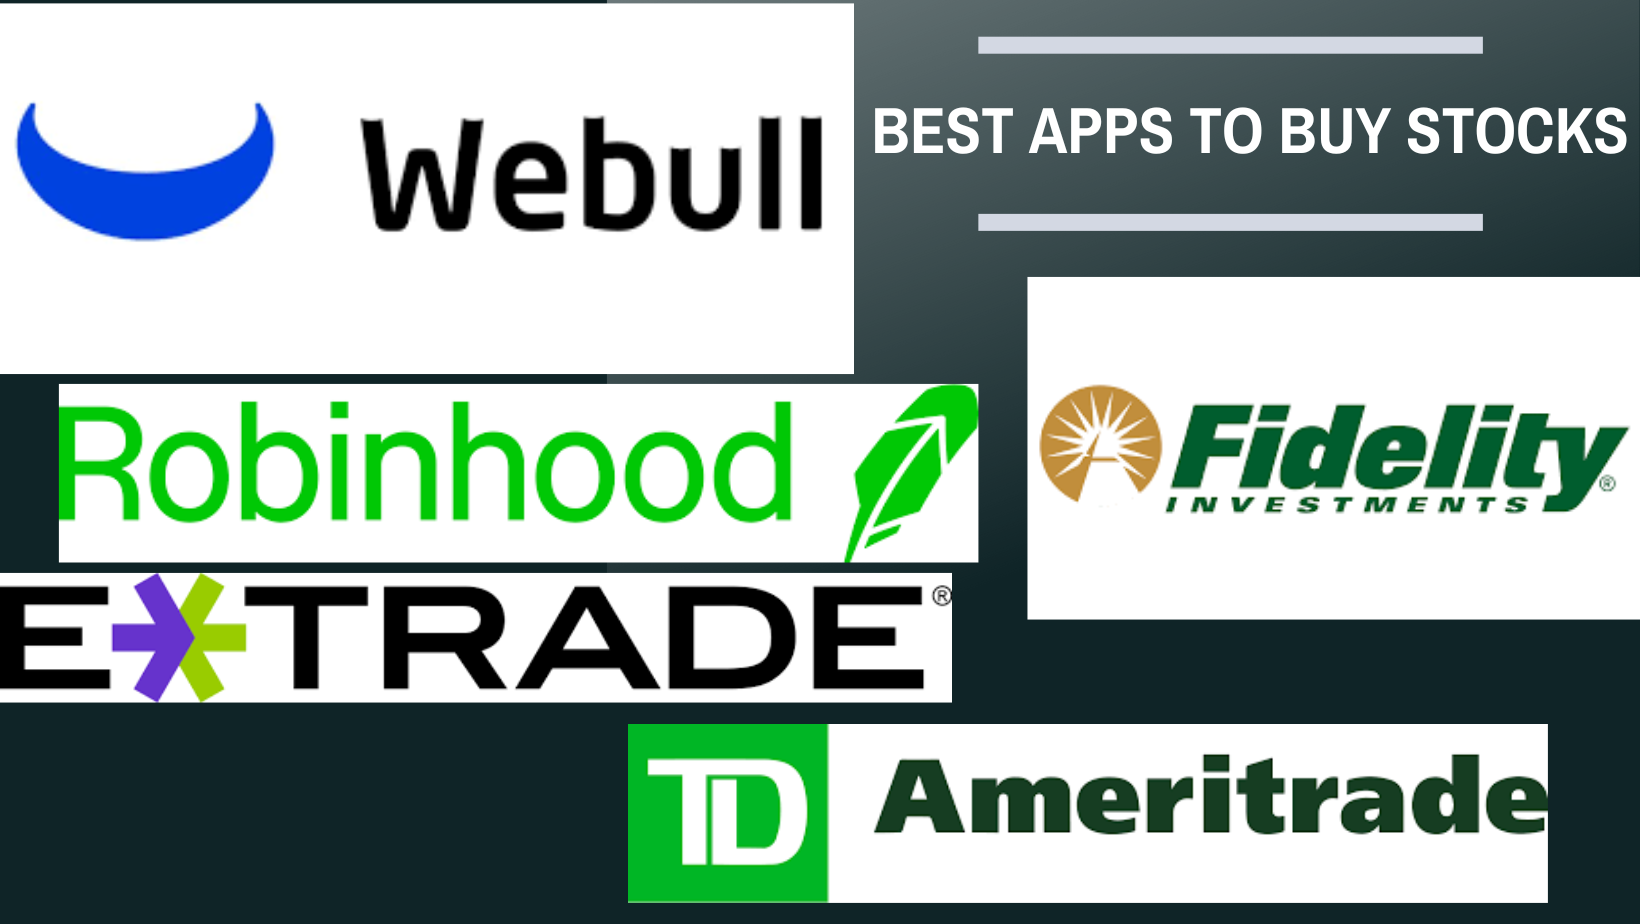 Best Apps to Buy Stocks